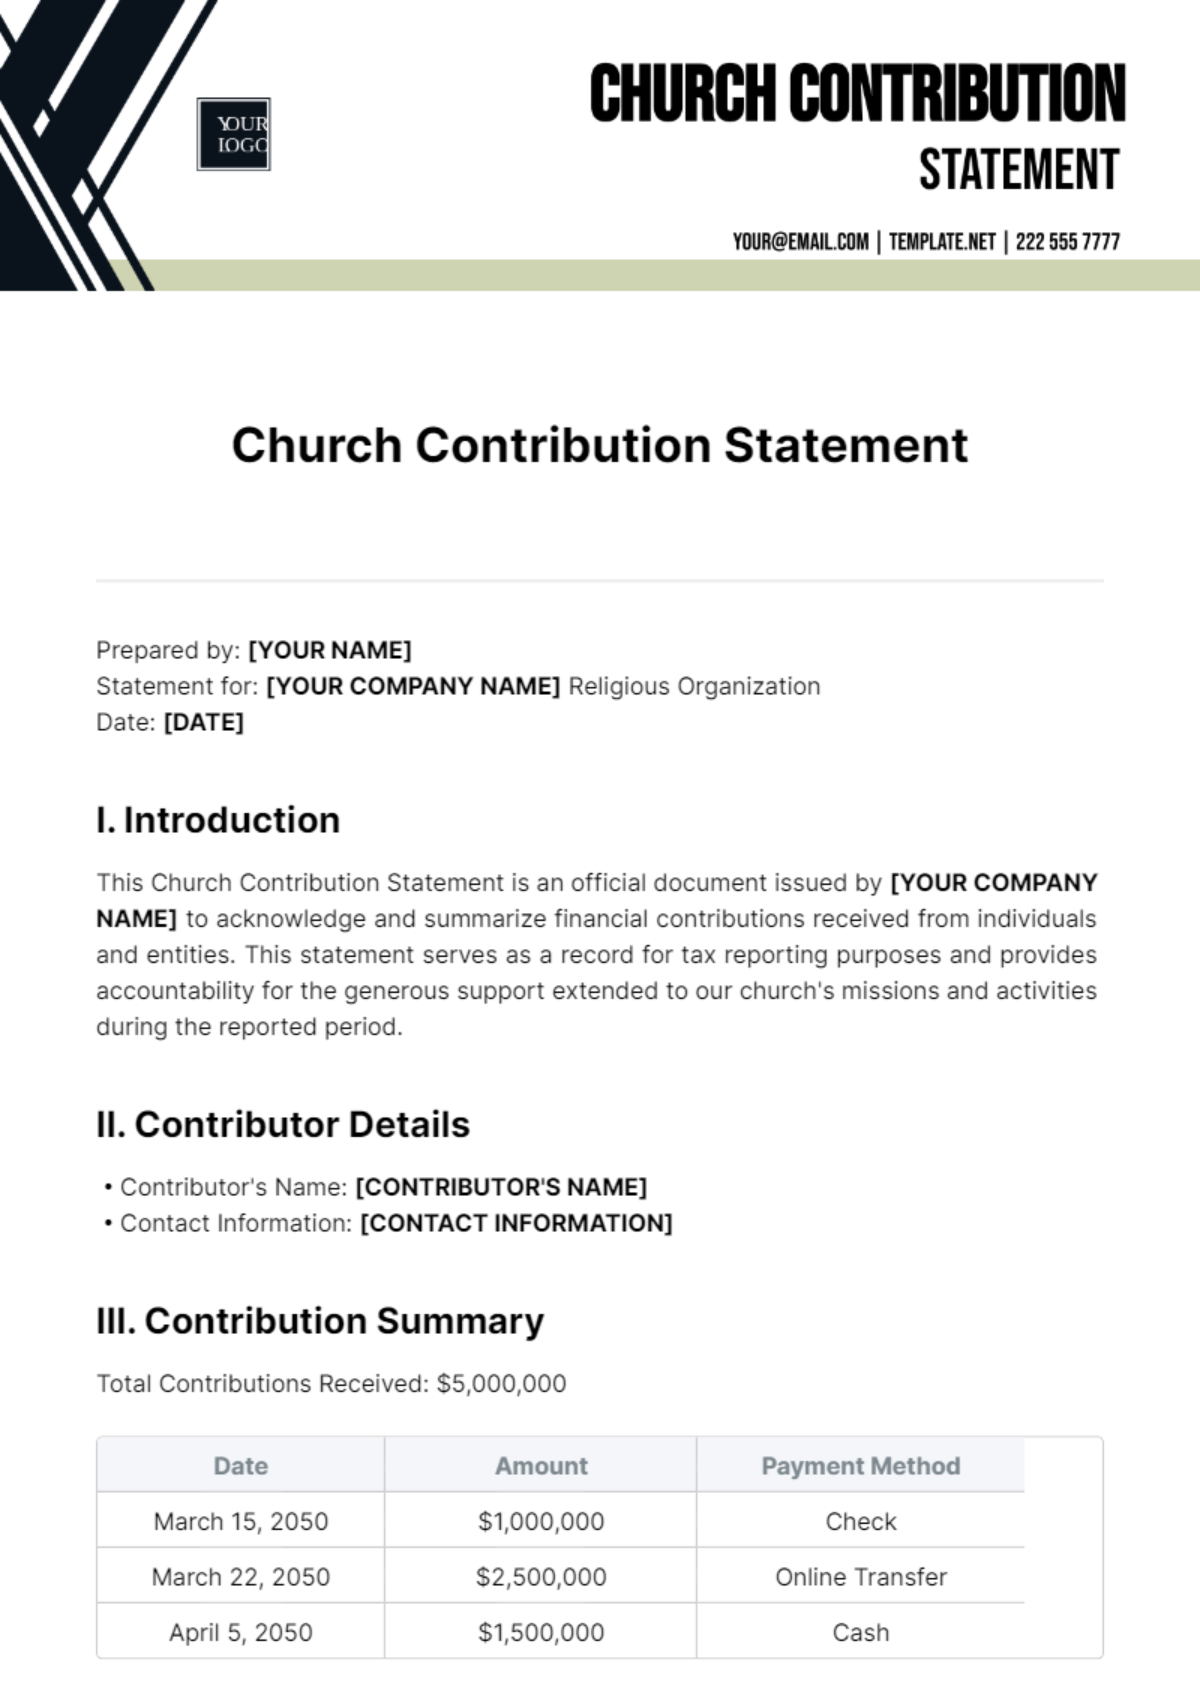 Church Contribution Statement Template